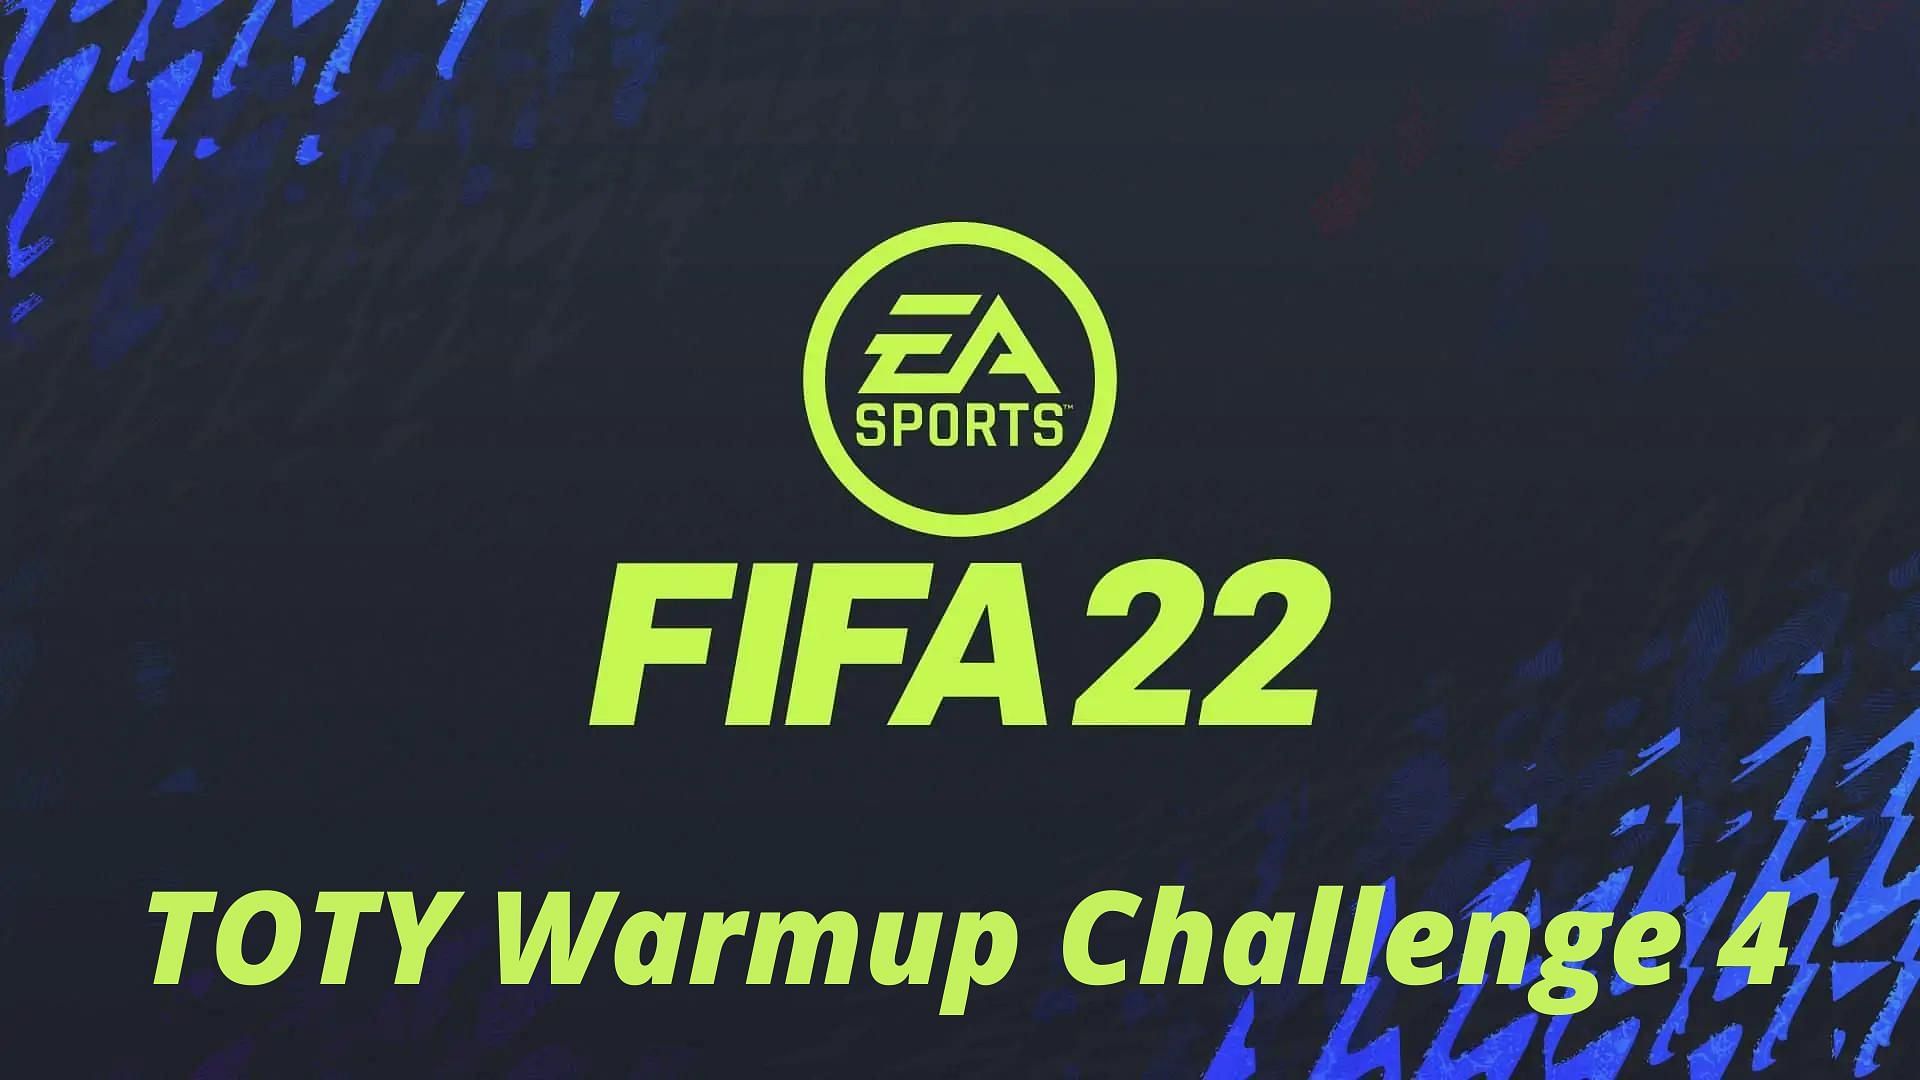 TOTY Warmup Challenge 4 SBC is now live in FIFA 22 (Image via Sportskeeda)